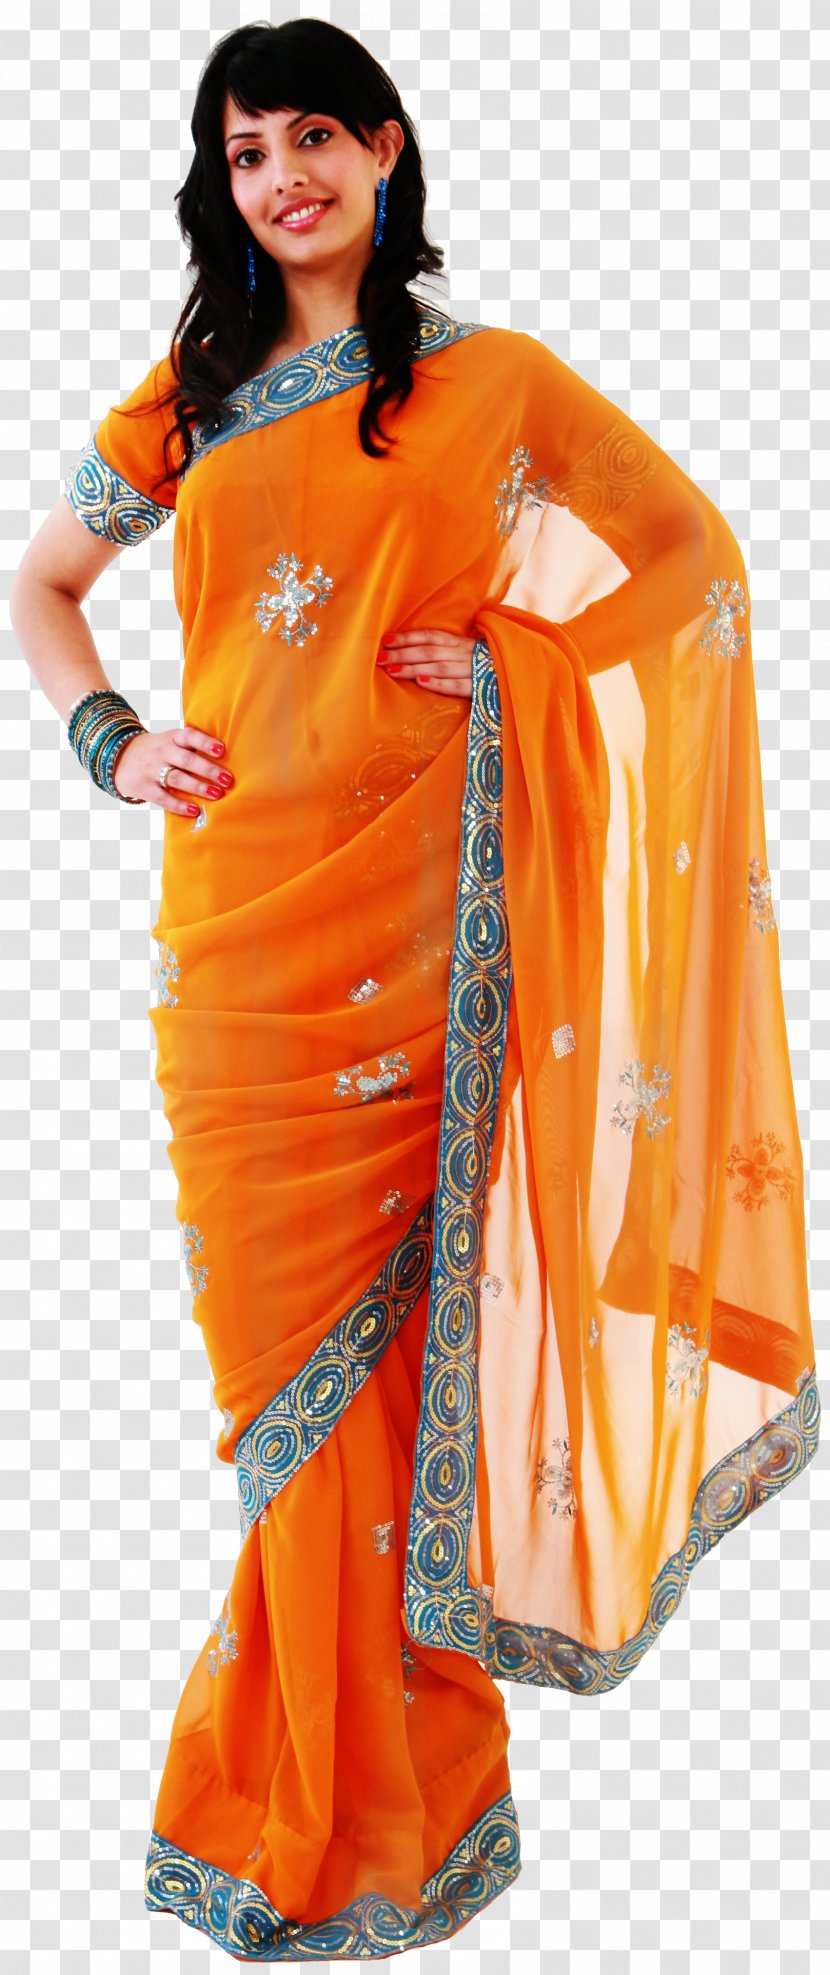 Sari Shoulder Orange S.A. Woman Costume - Sa Transparent PNG